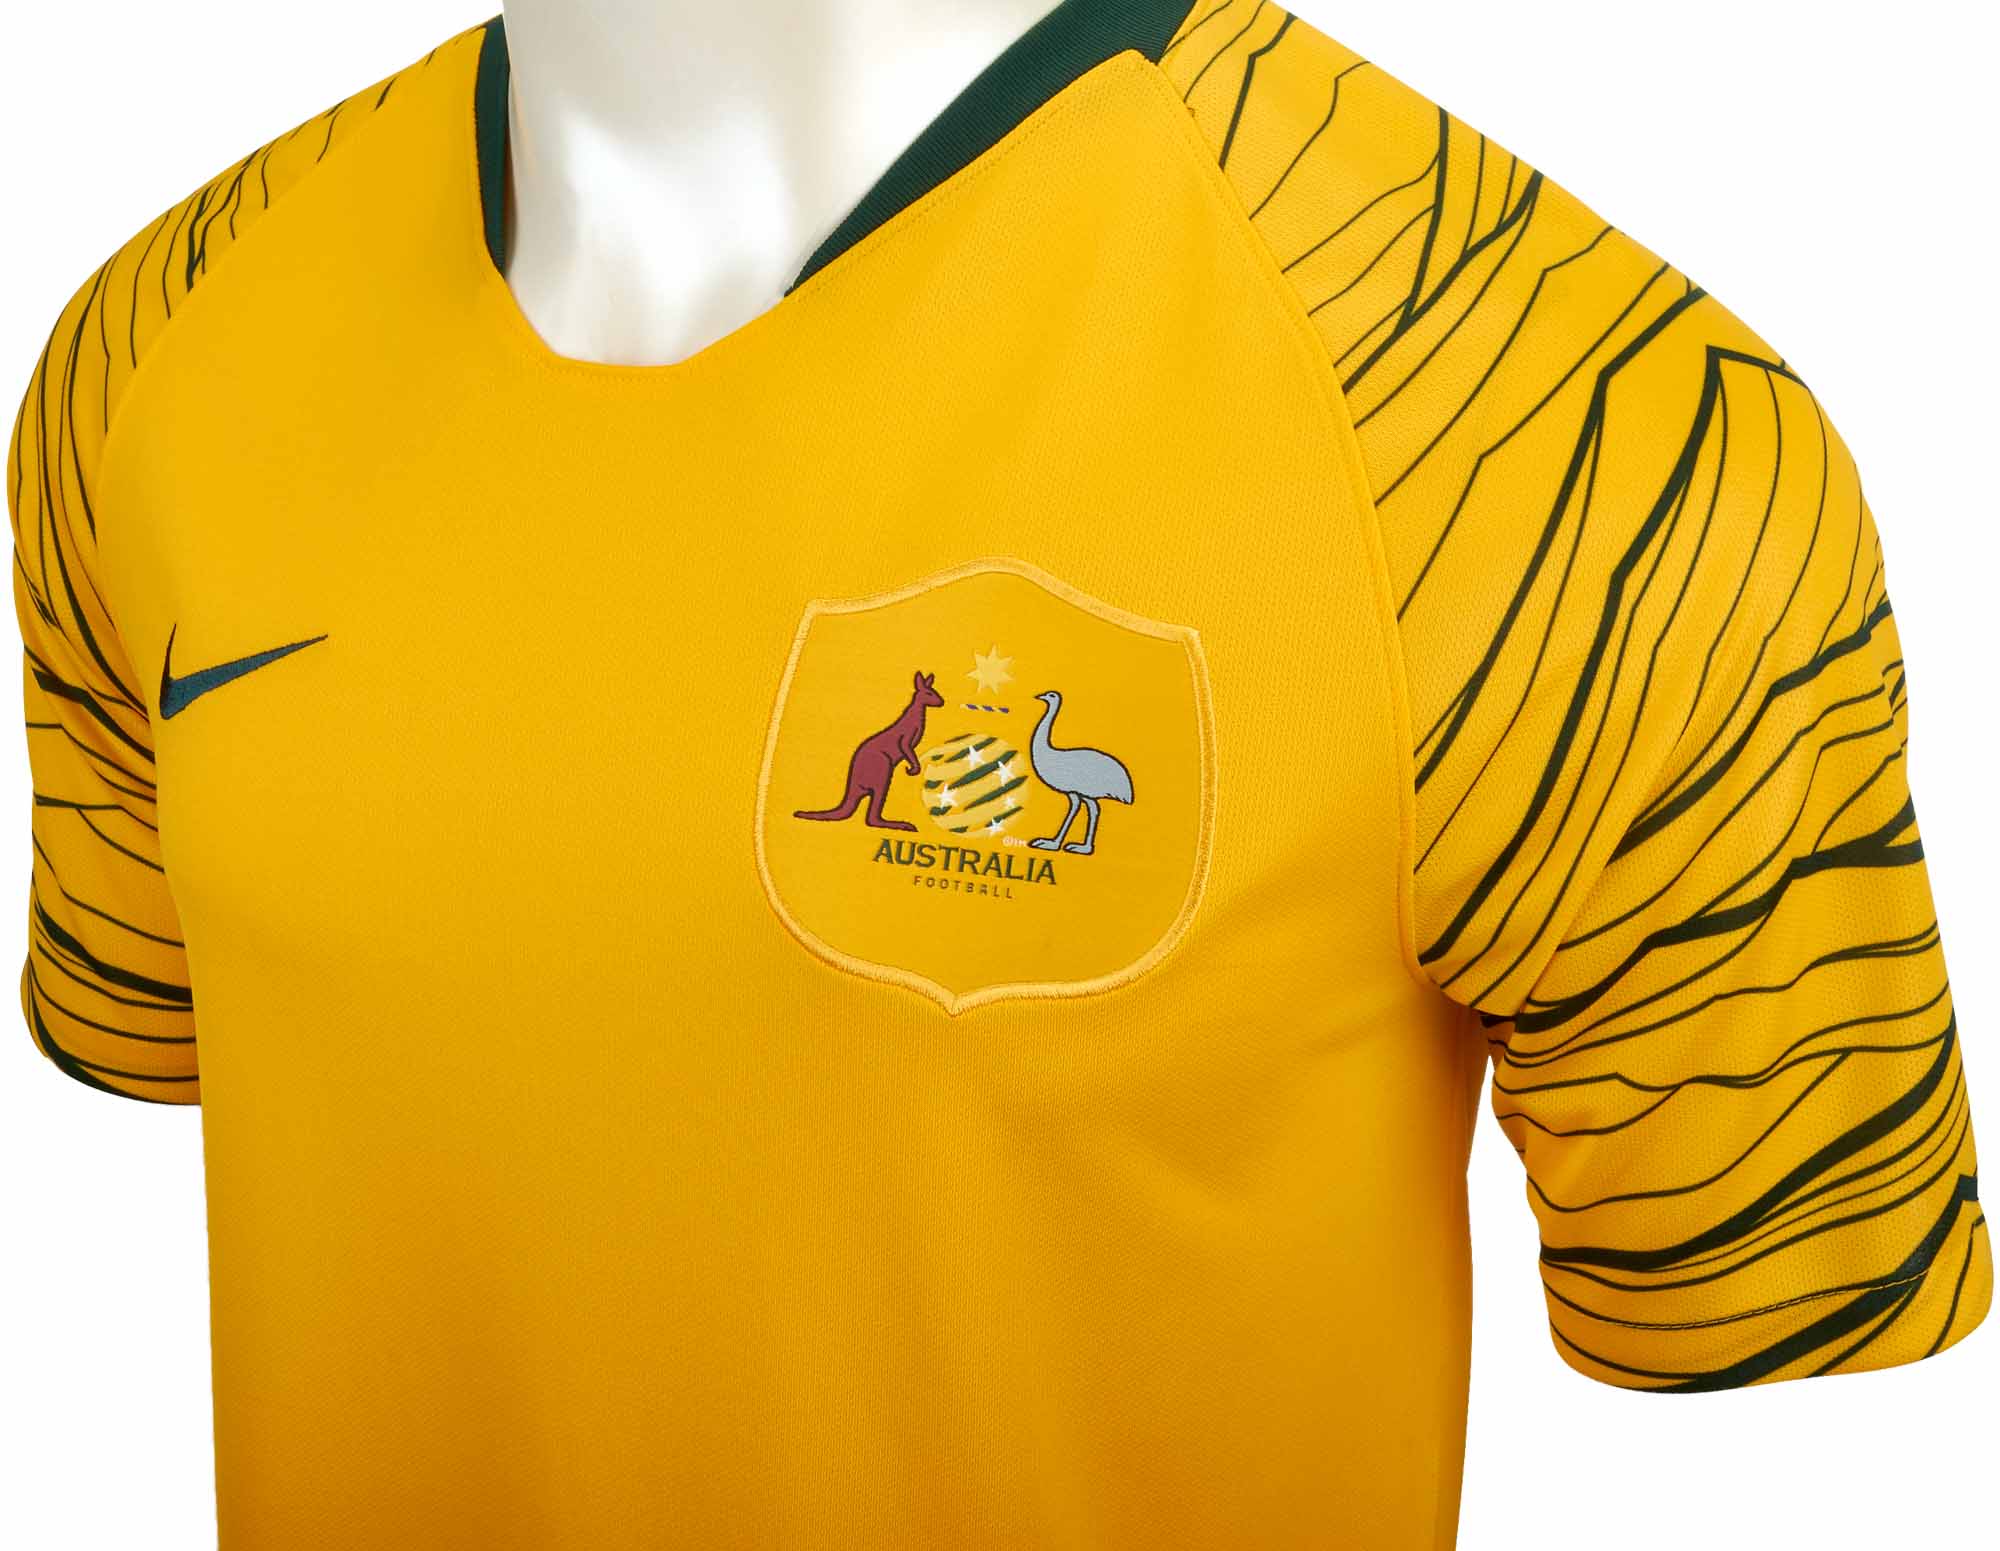 australia jersey 2018